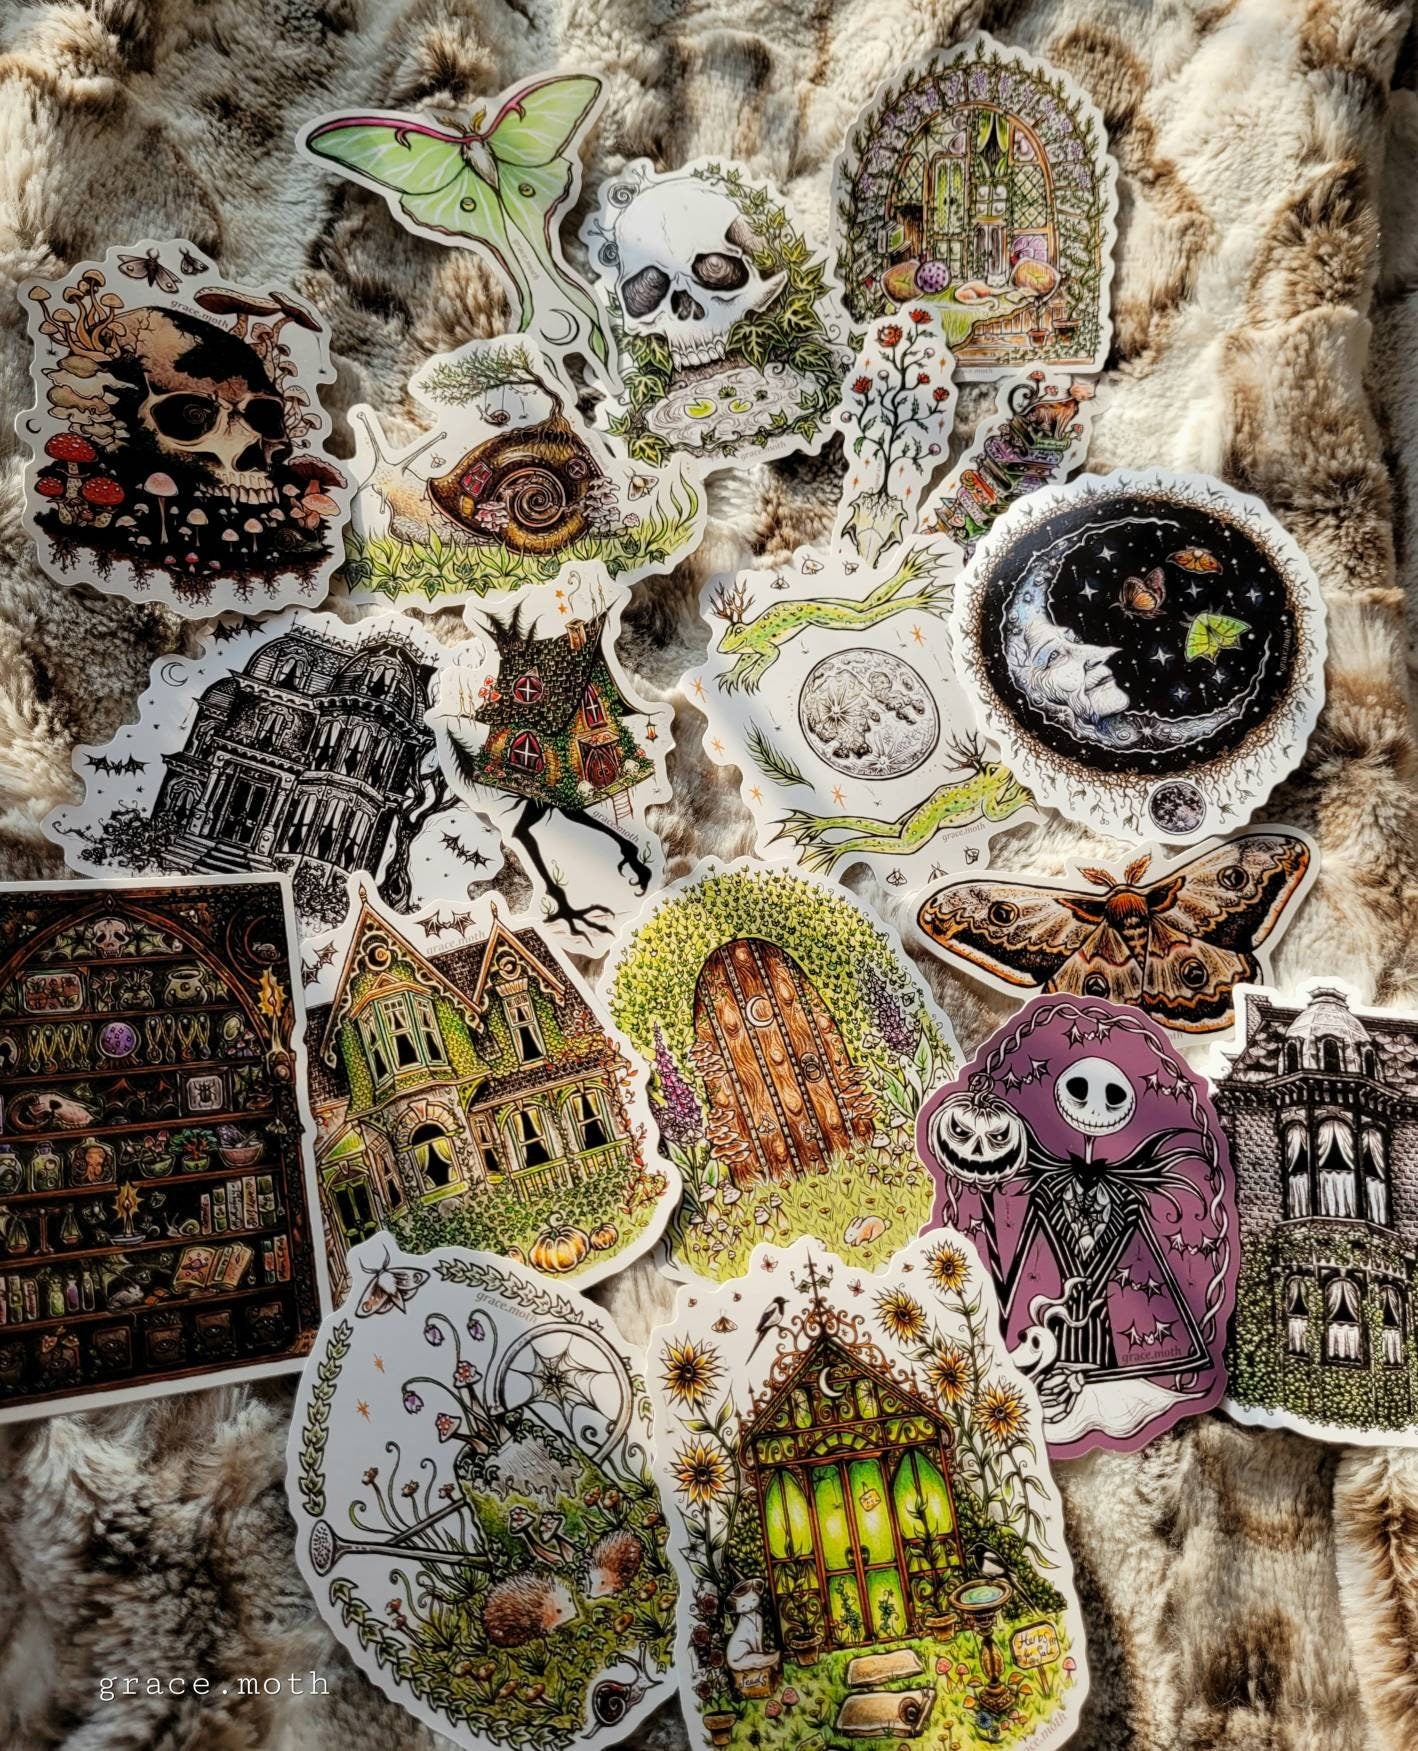 Secret Garden Door - Vinyl Sticker 10cm by 8.5cm - Illustrated by Grace moth.  Cottagecore, ivy, foxgloves, ghosts, fantasy, fairy